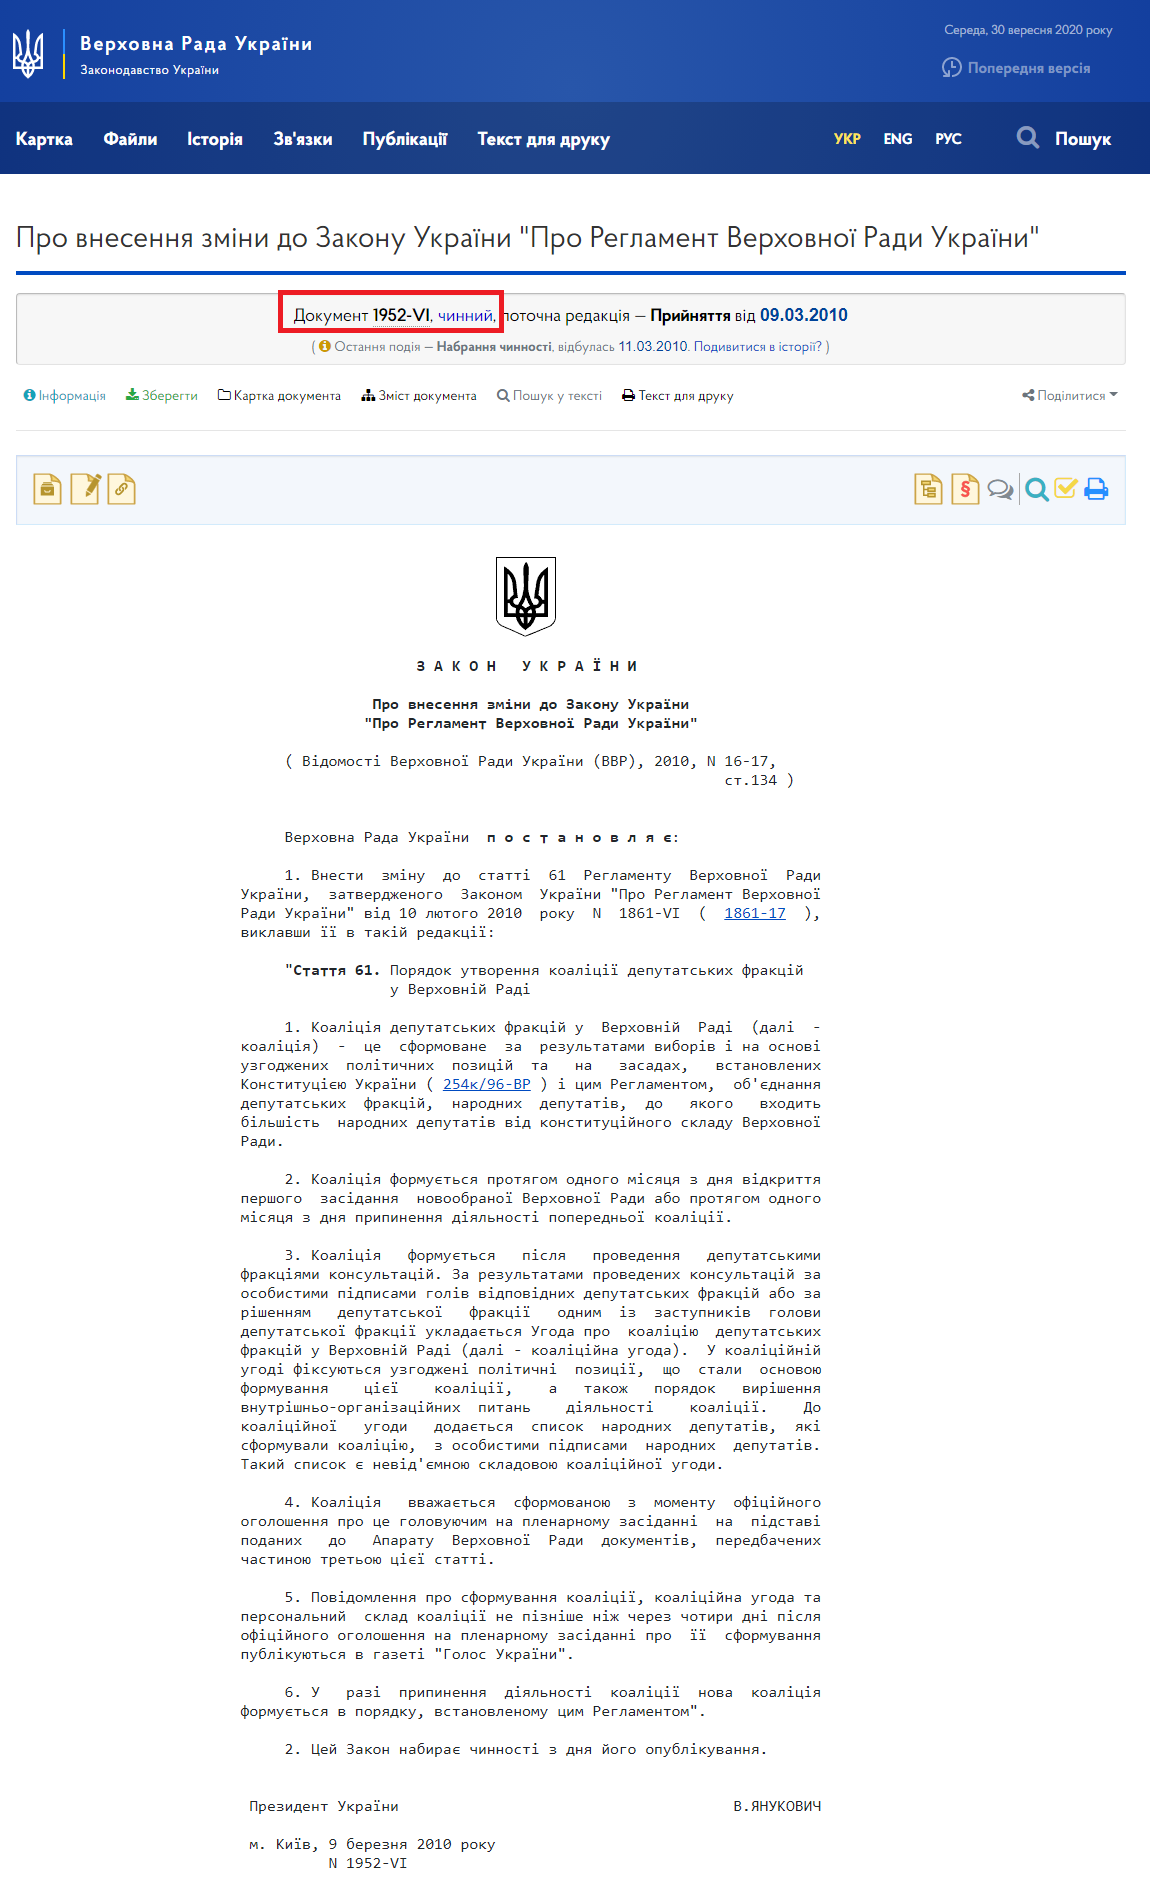 https://zakon.rada.gov.ua/laws/show/1952-17#Text